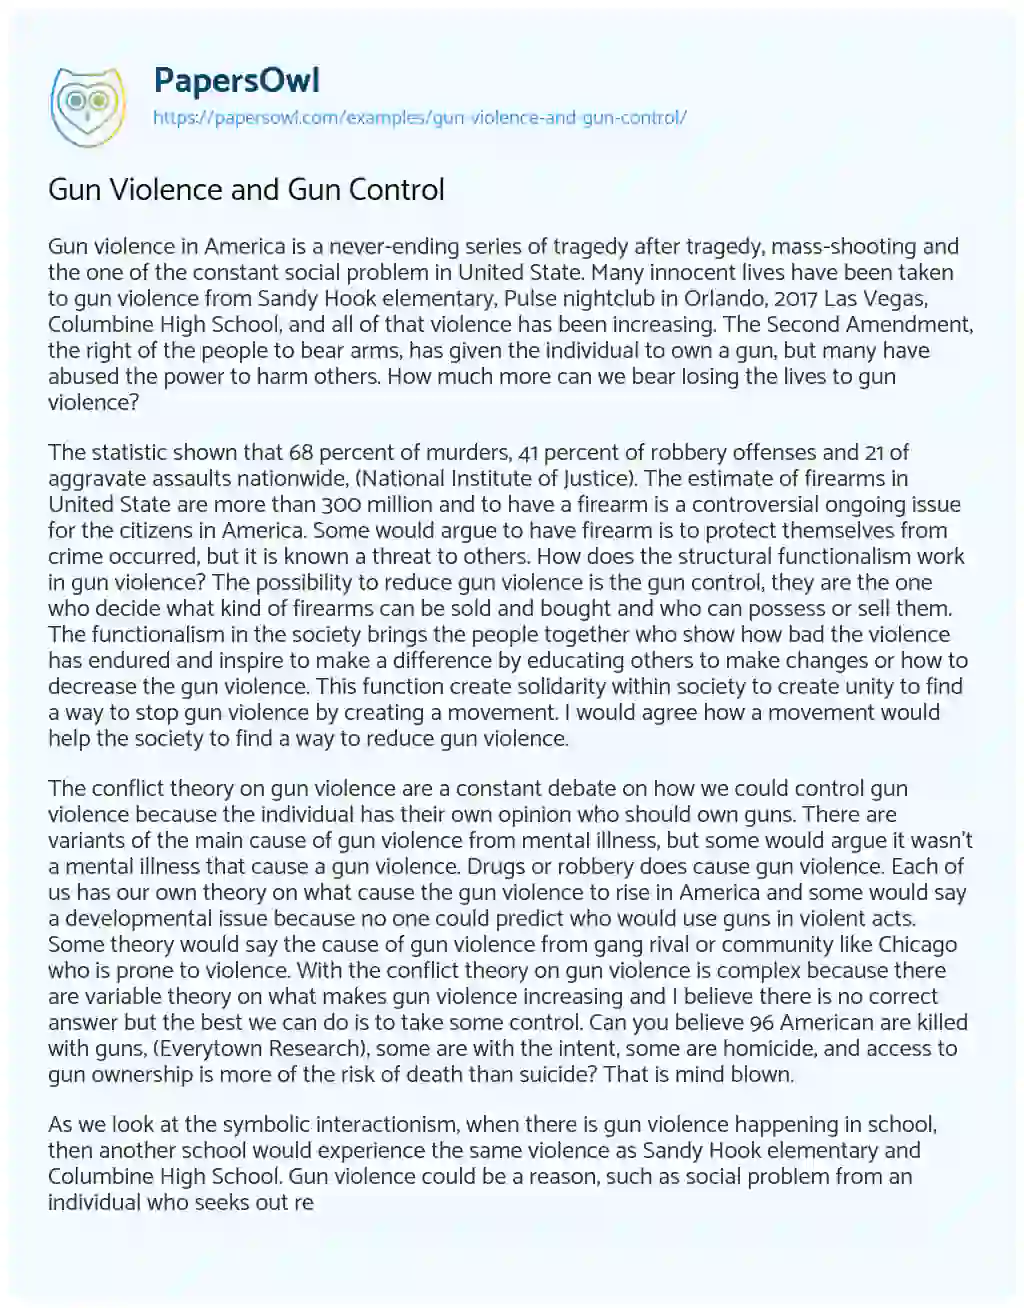 Essay on Gun Violence and Gun Control